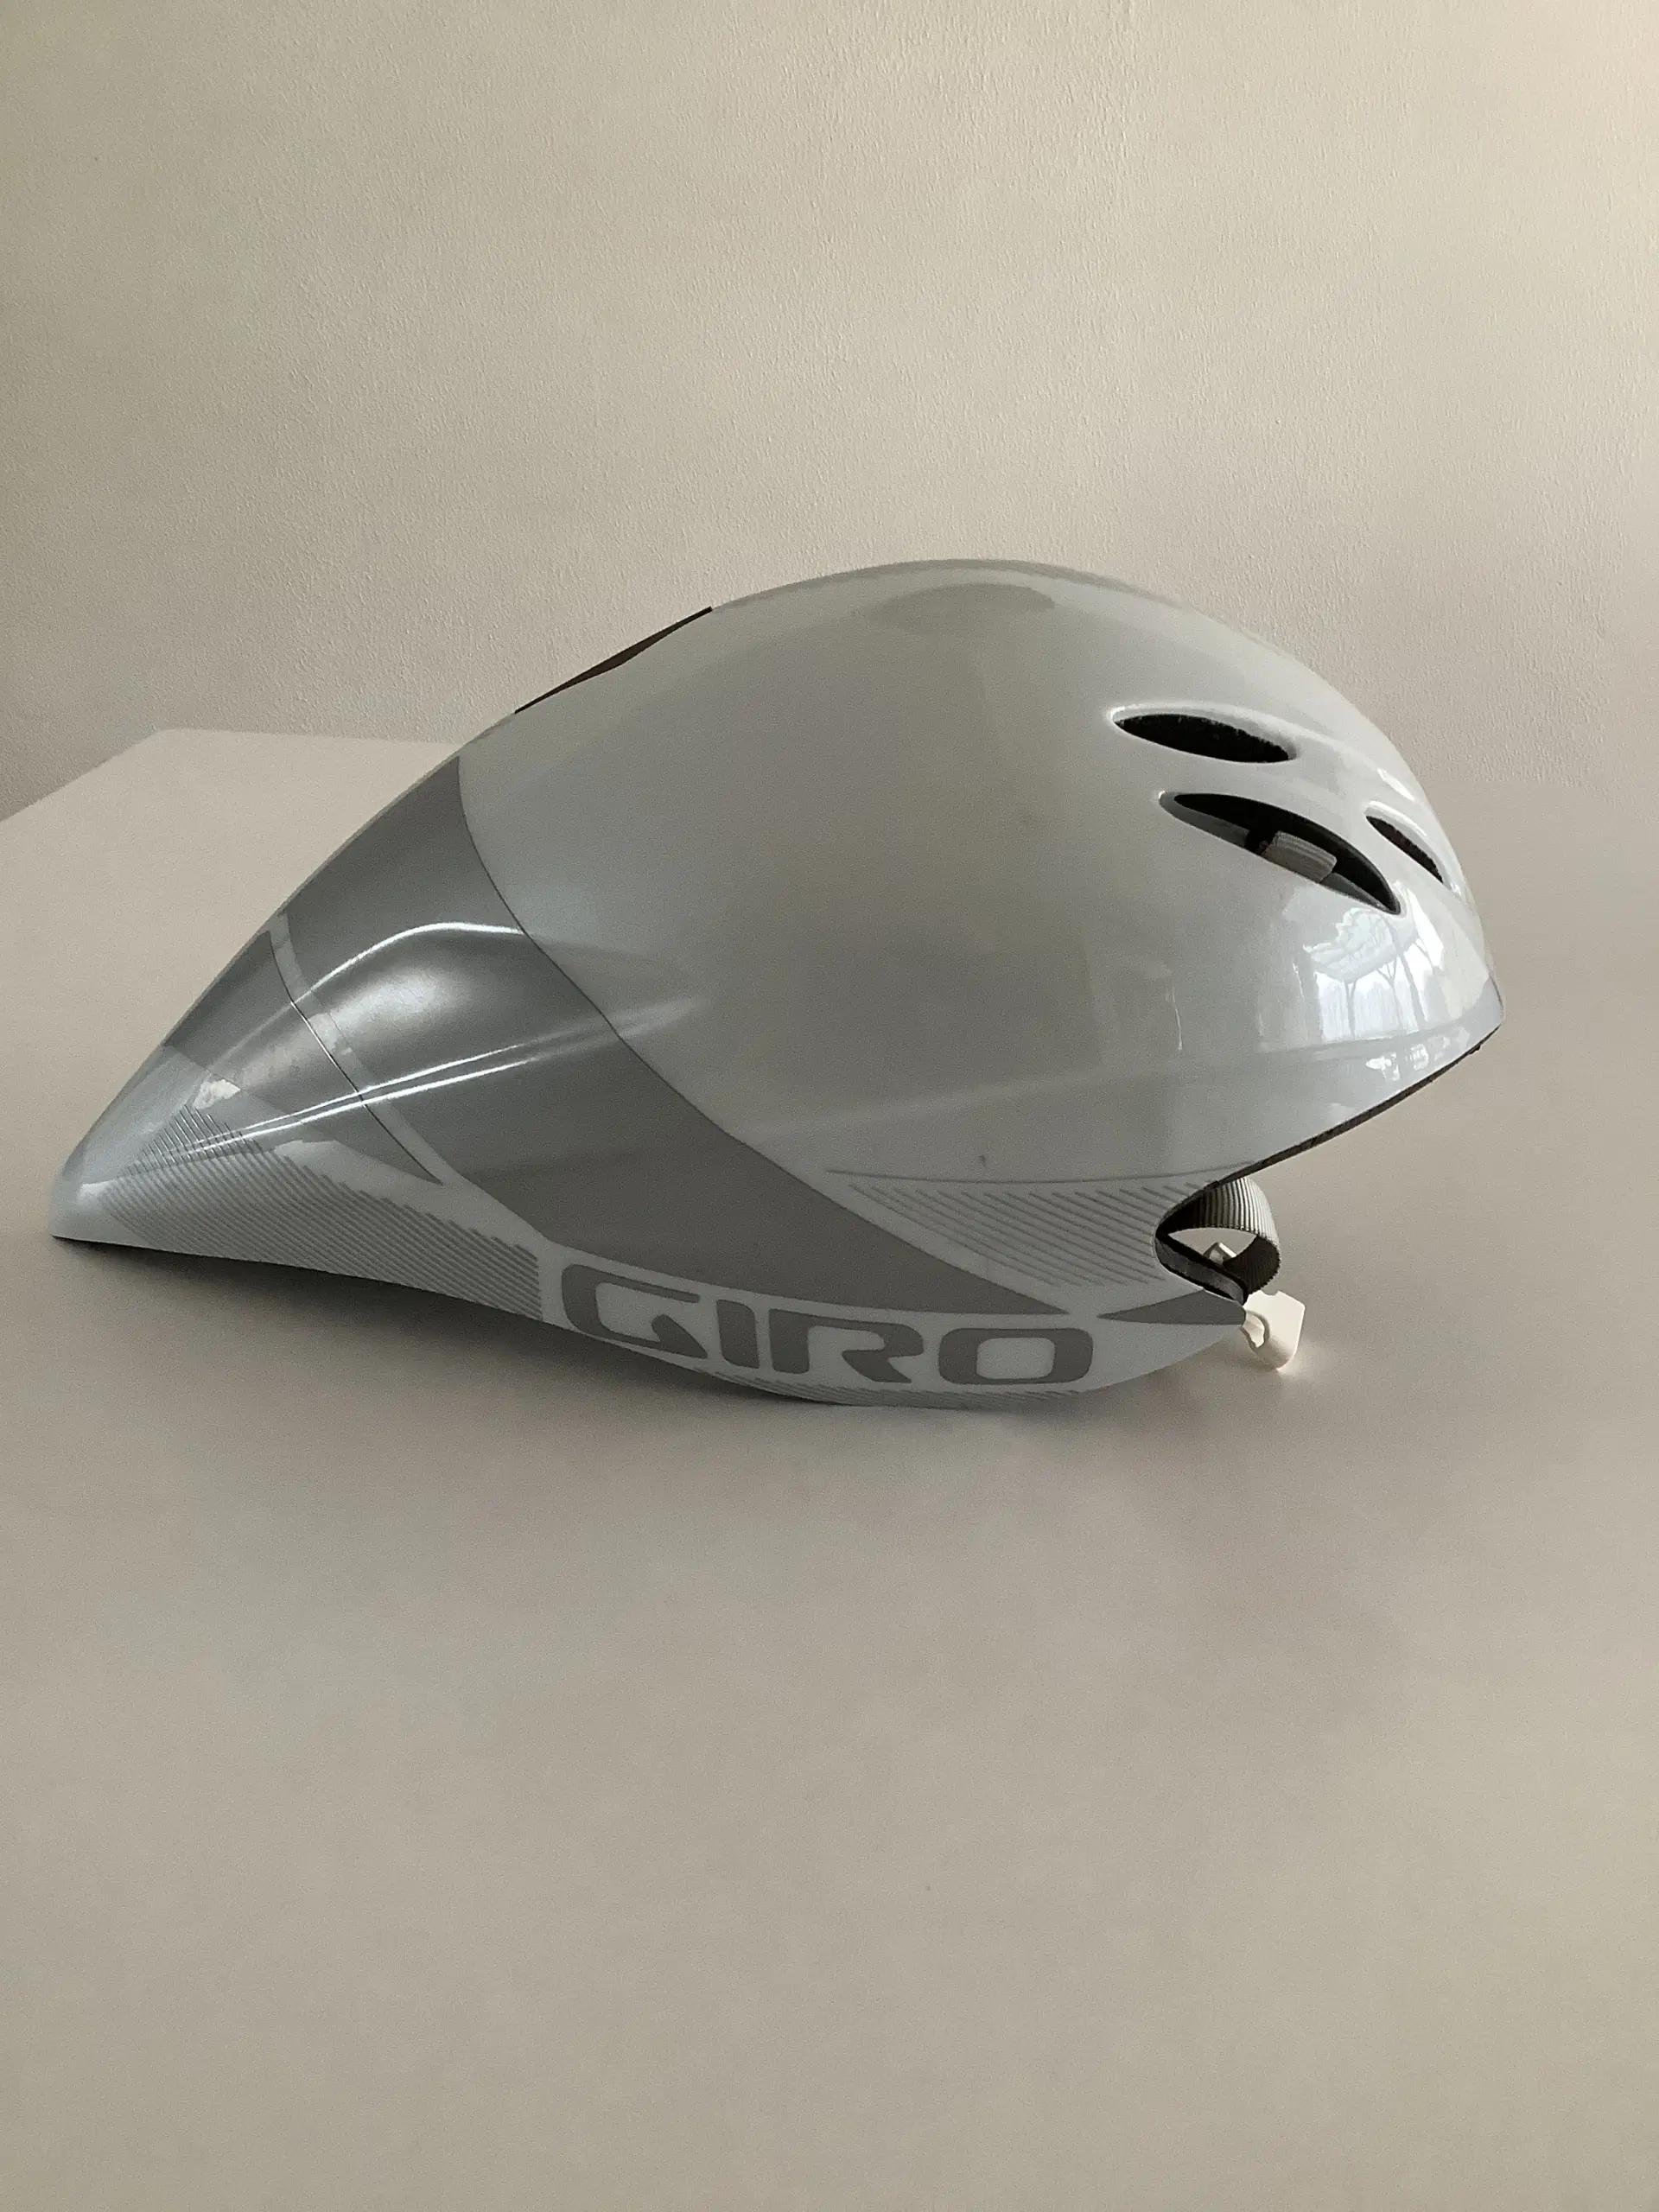 Tri hjelm / Giro Advantage